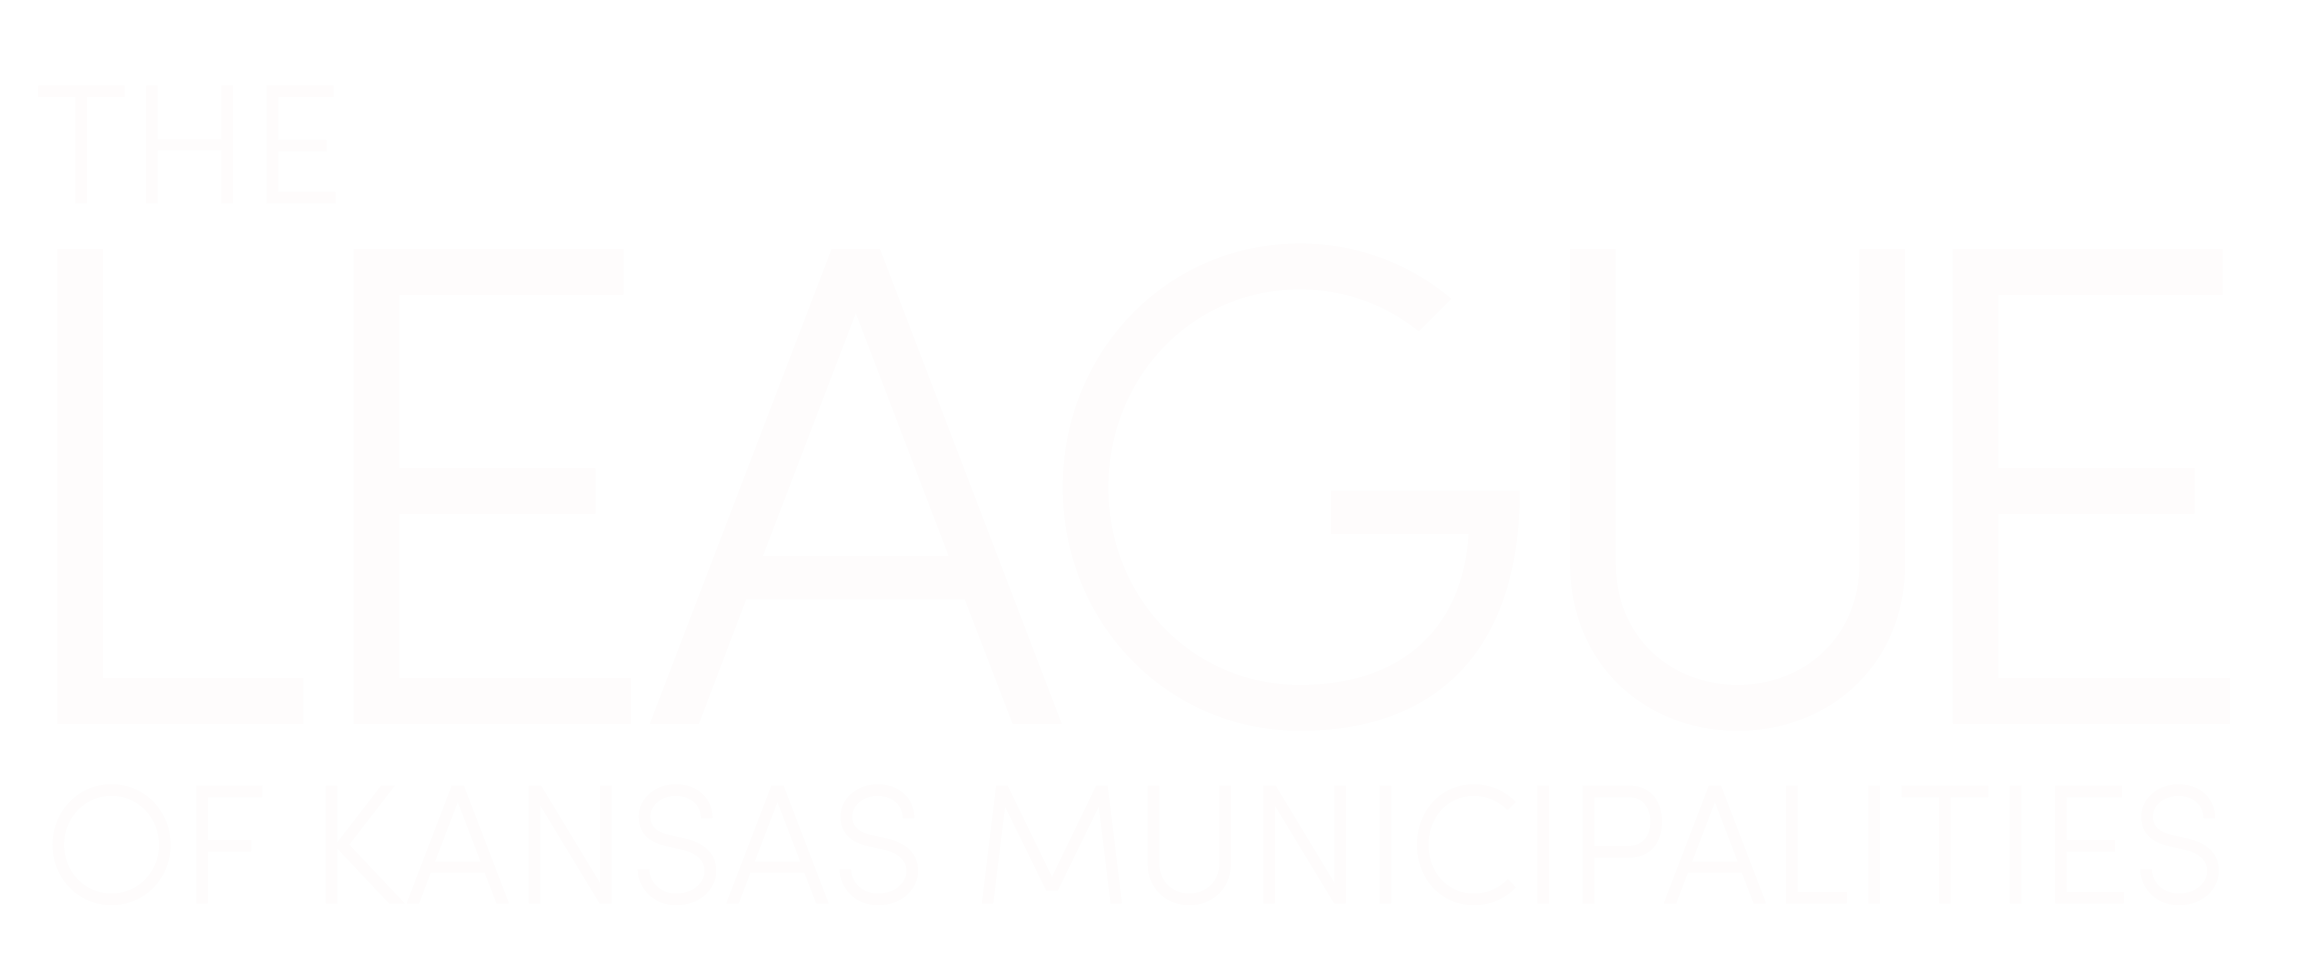 The League of Kansa Municipalities Logo